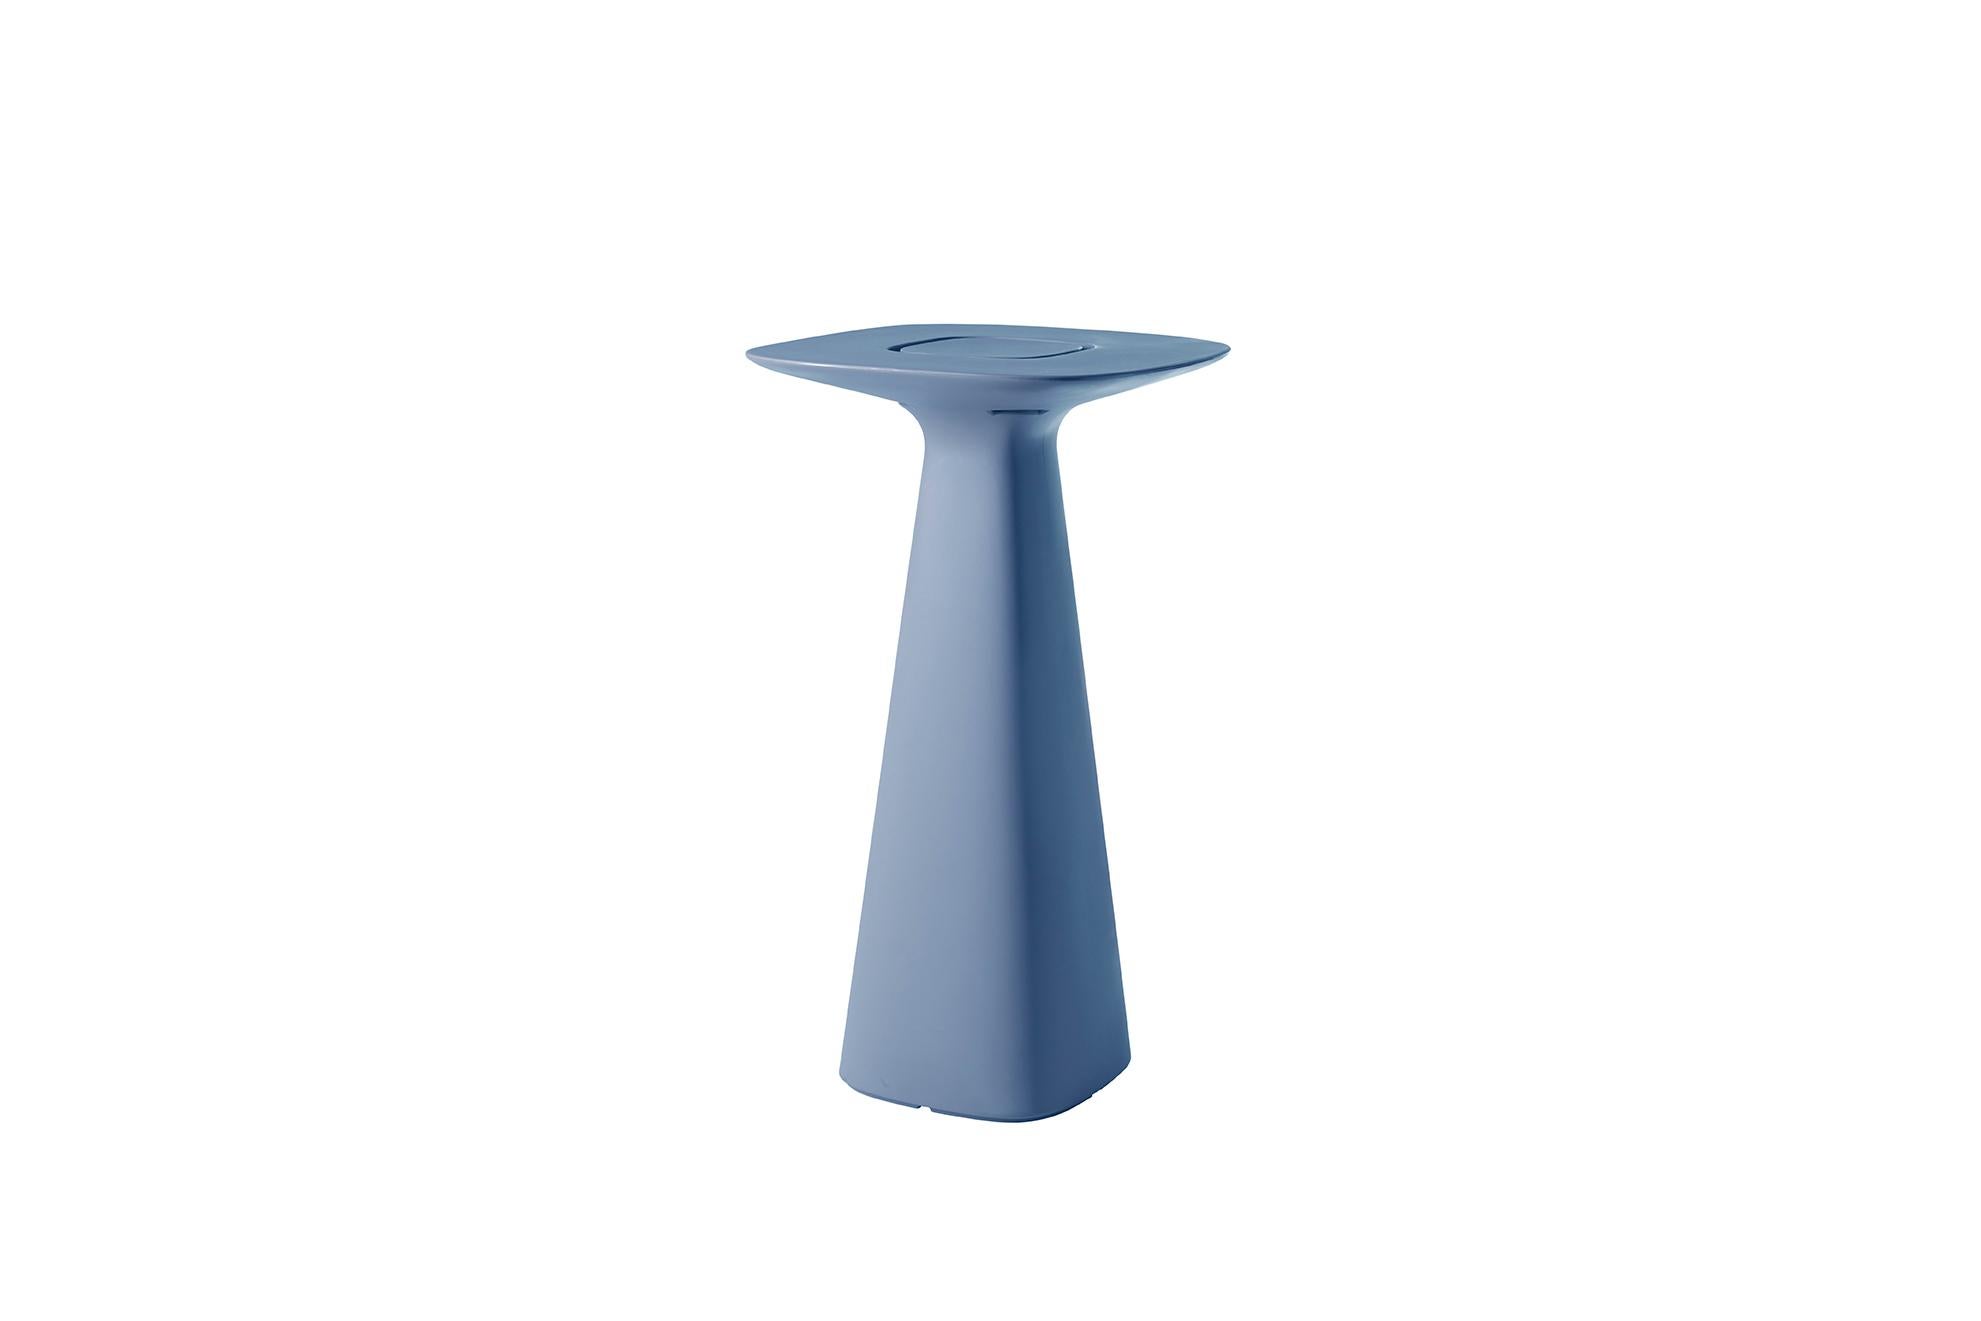 Slide Design Amélie Up Table in Powder Blue by Italo Pertichini